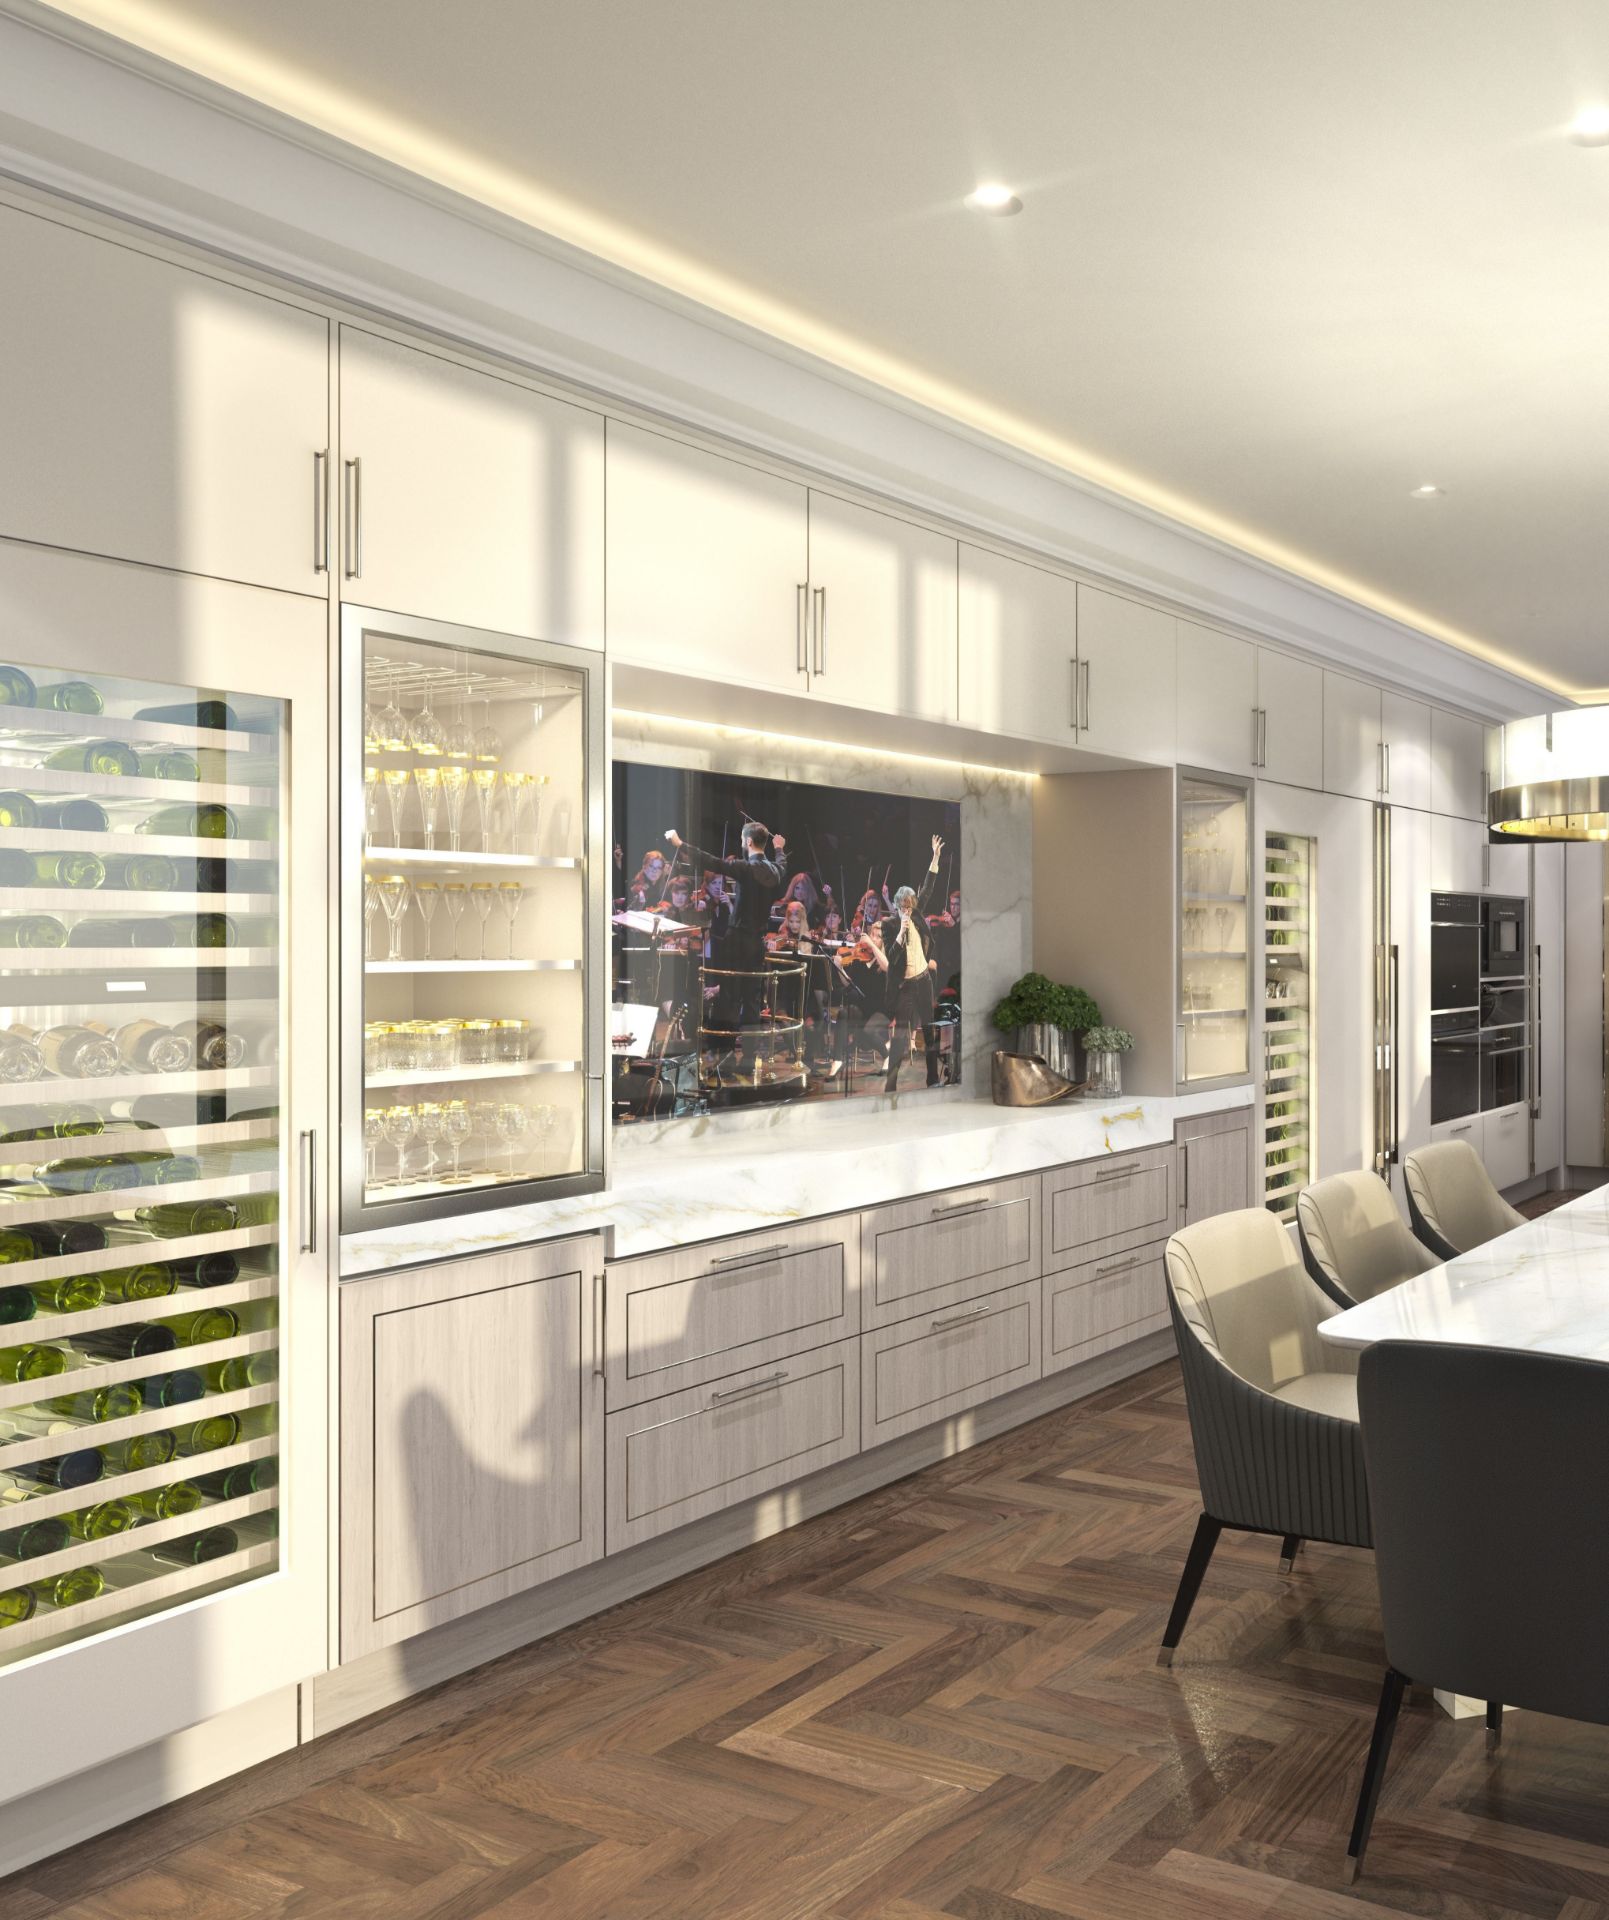 Bespke Luxury Designer Kitchen - Base and Wall Cupboards as specified below - note no appliances, - Bild 2 aus 2